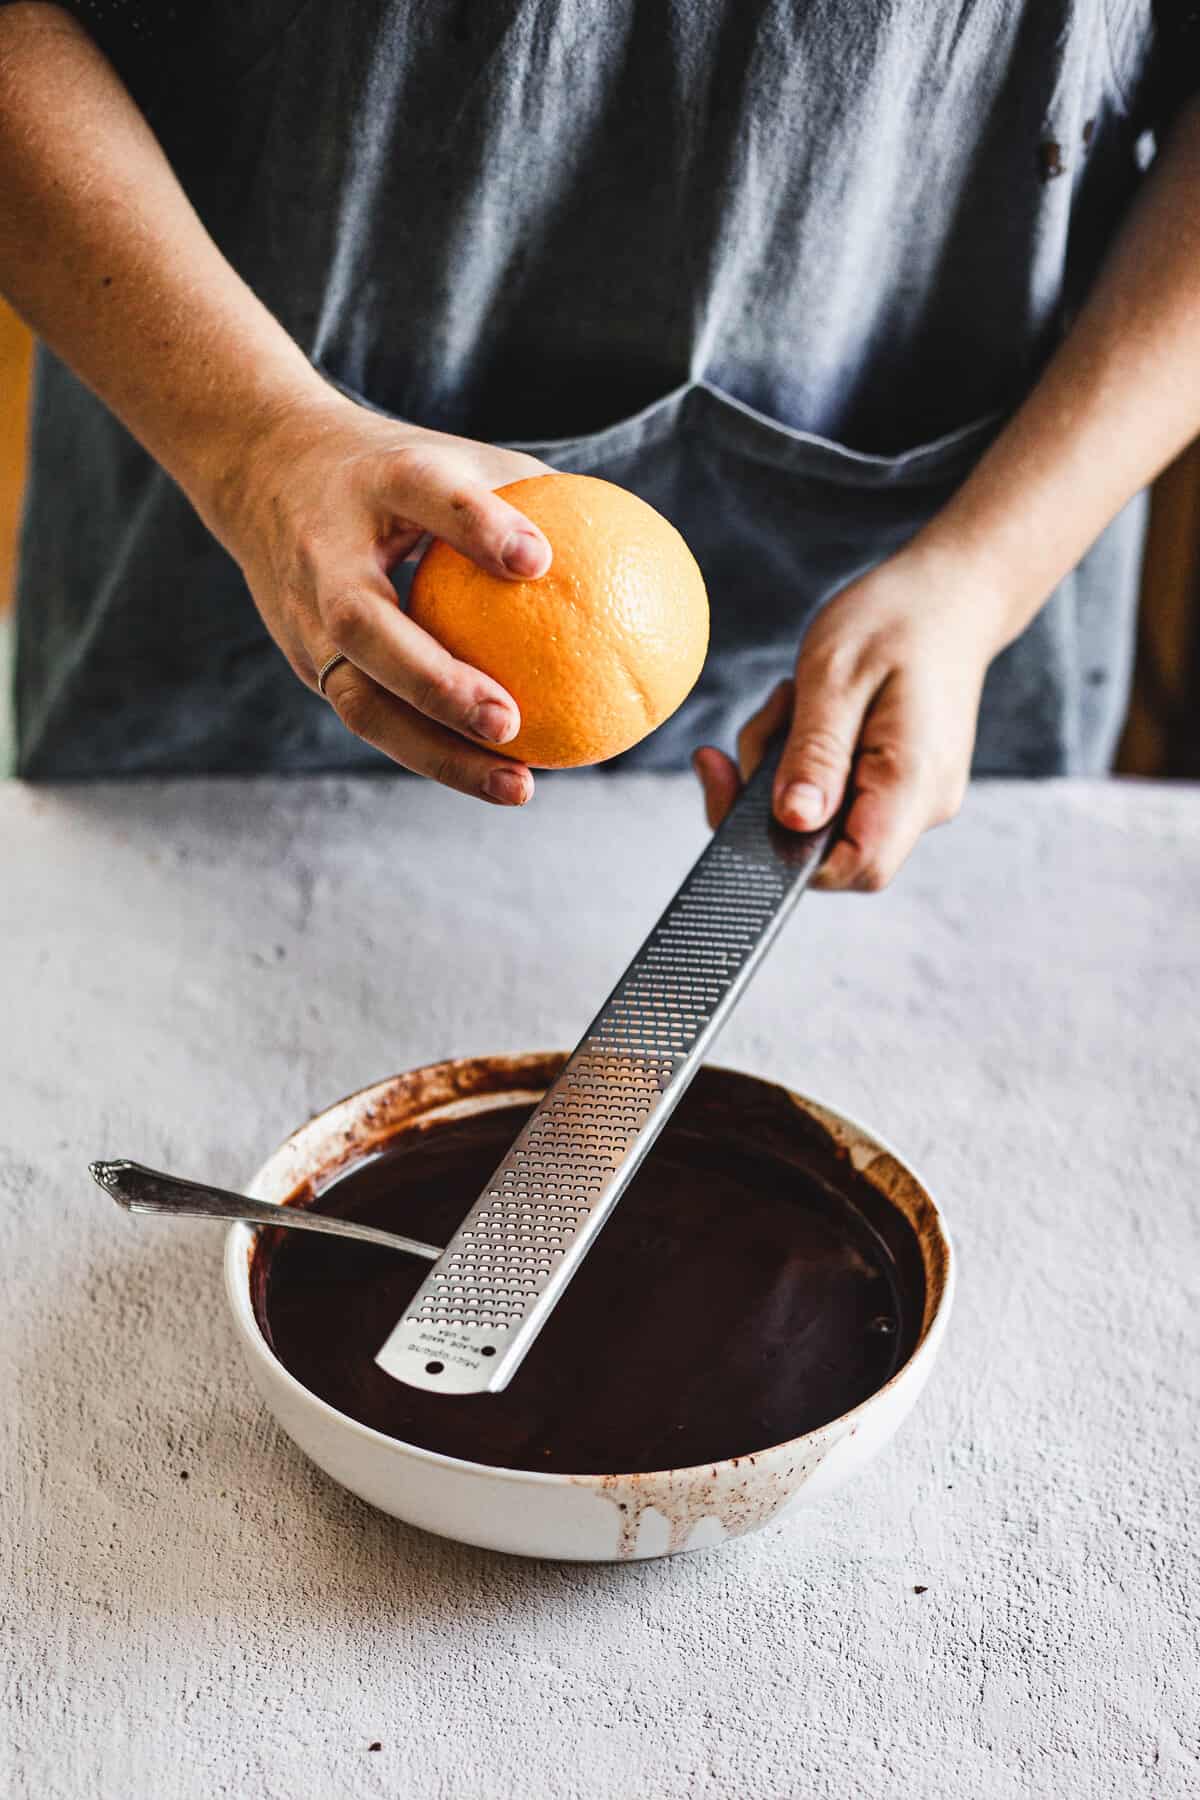 grating orange zest into chocolate ganache